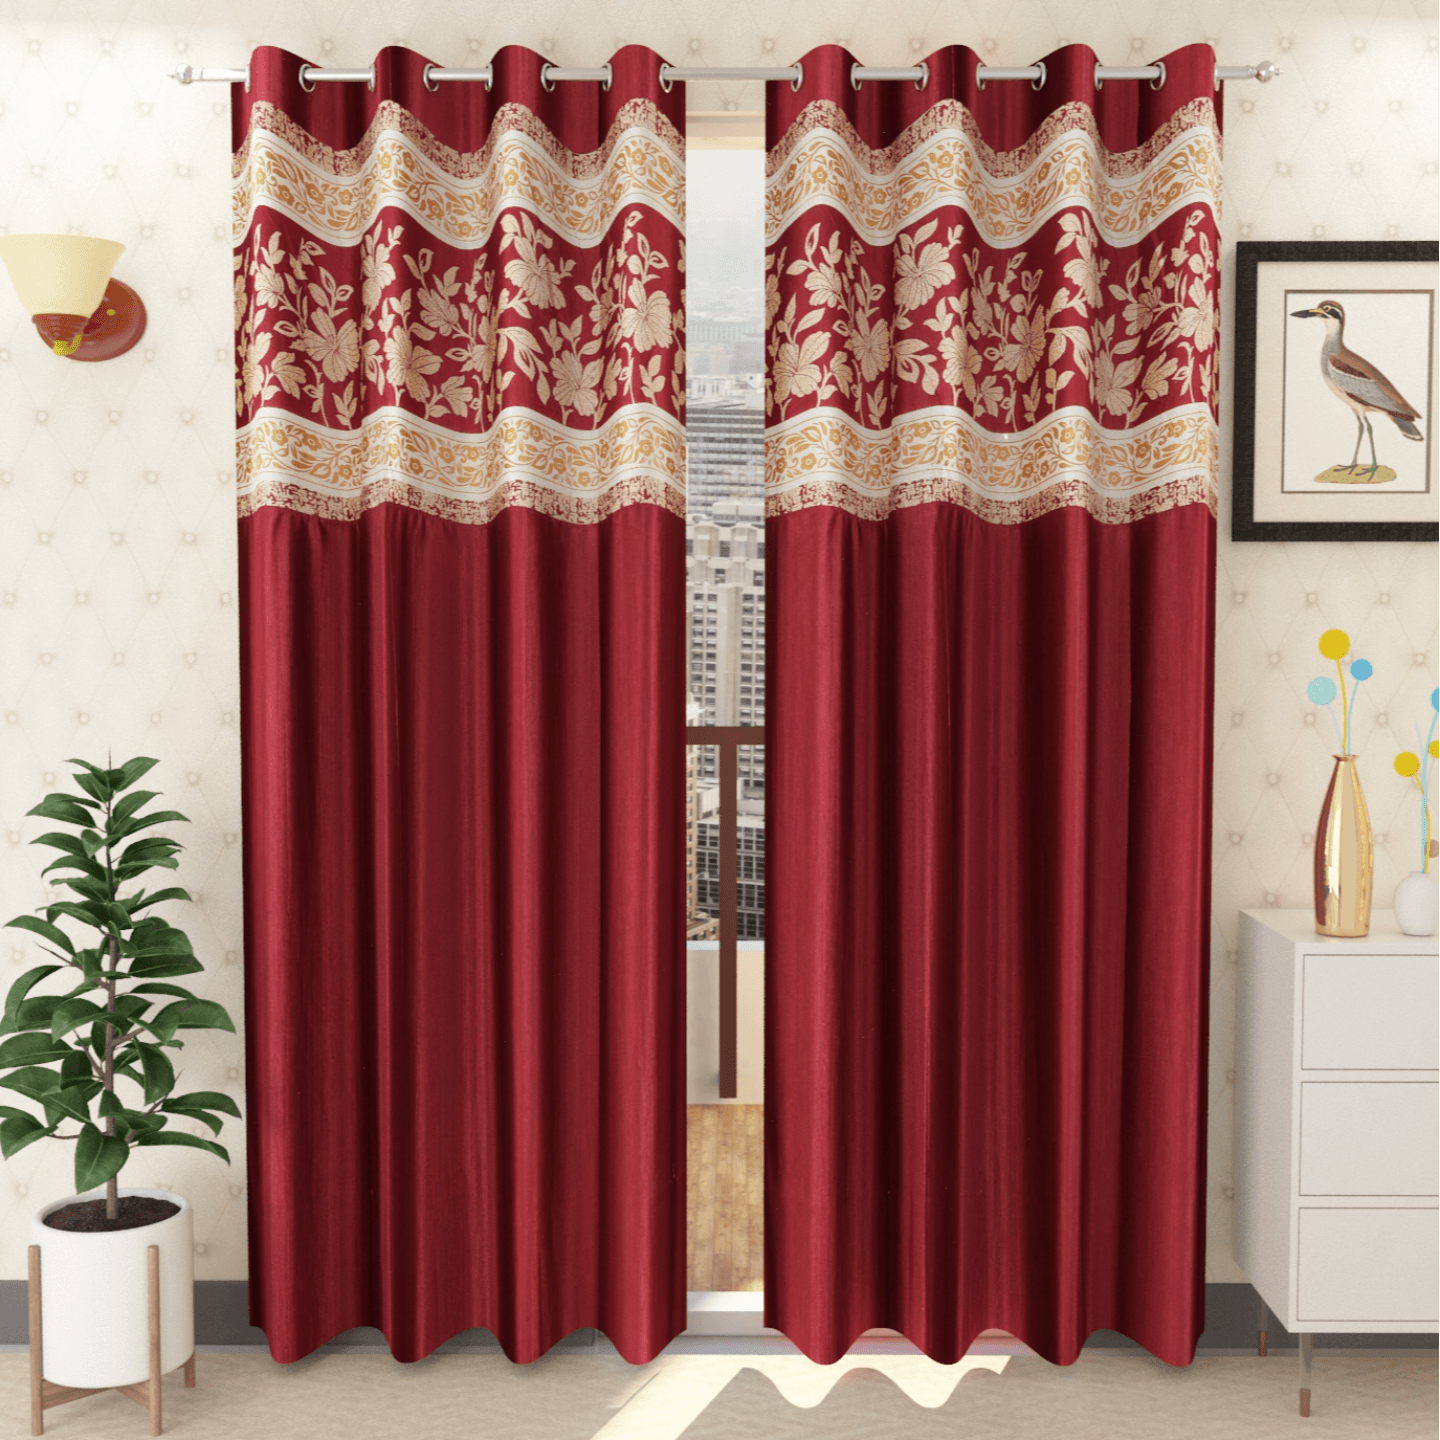 Handtex Home Patchwork curtain for door 9 feet set of 2pc Maroon color